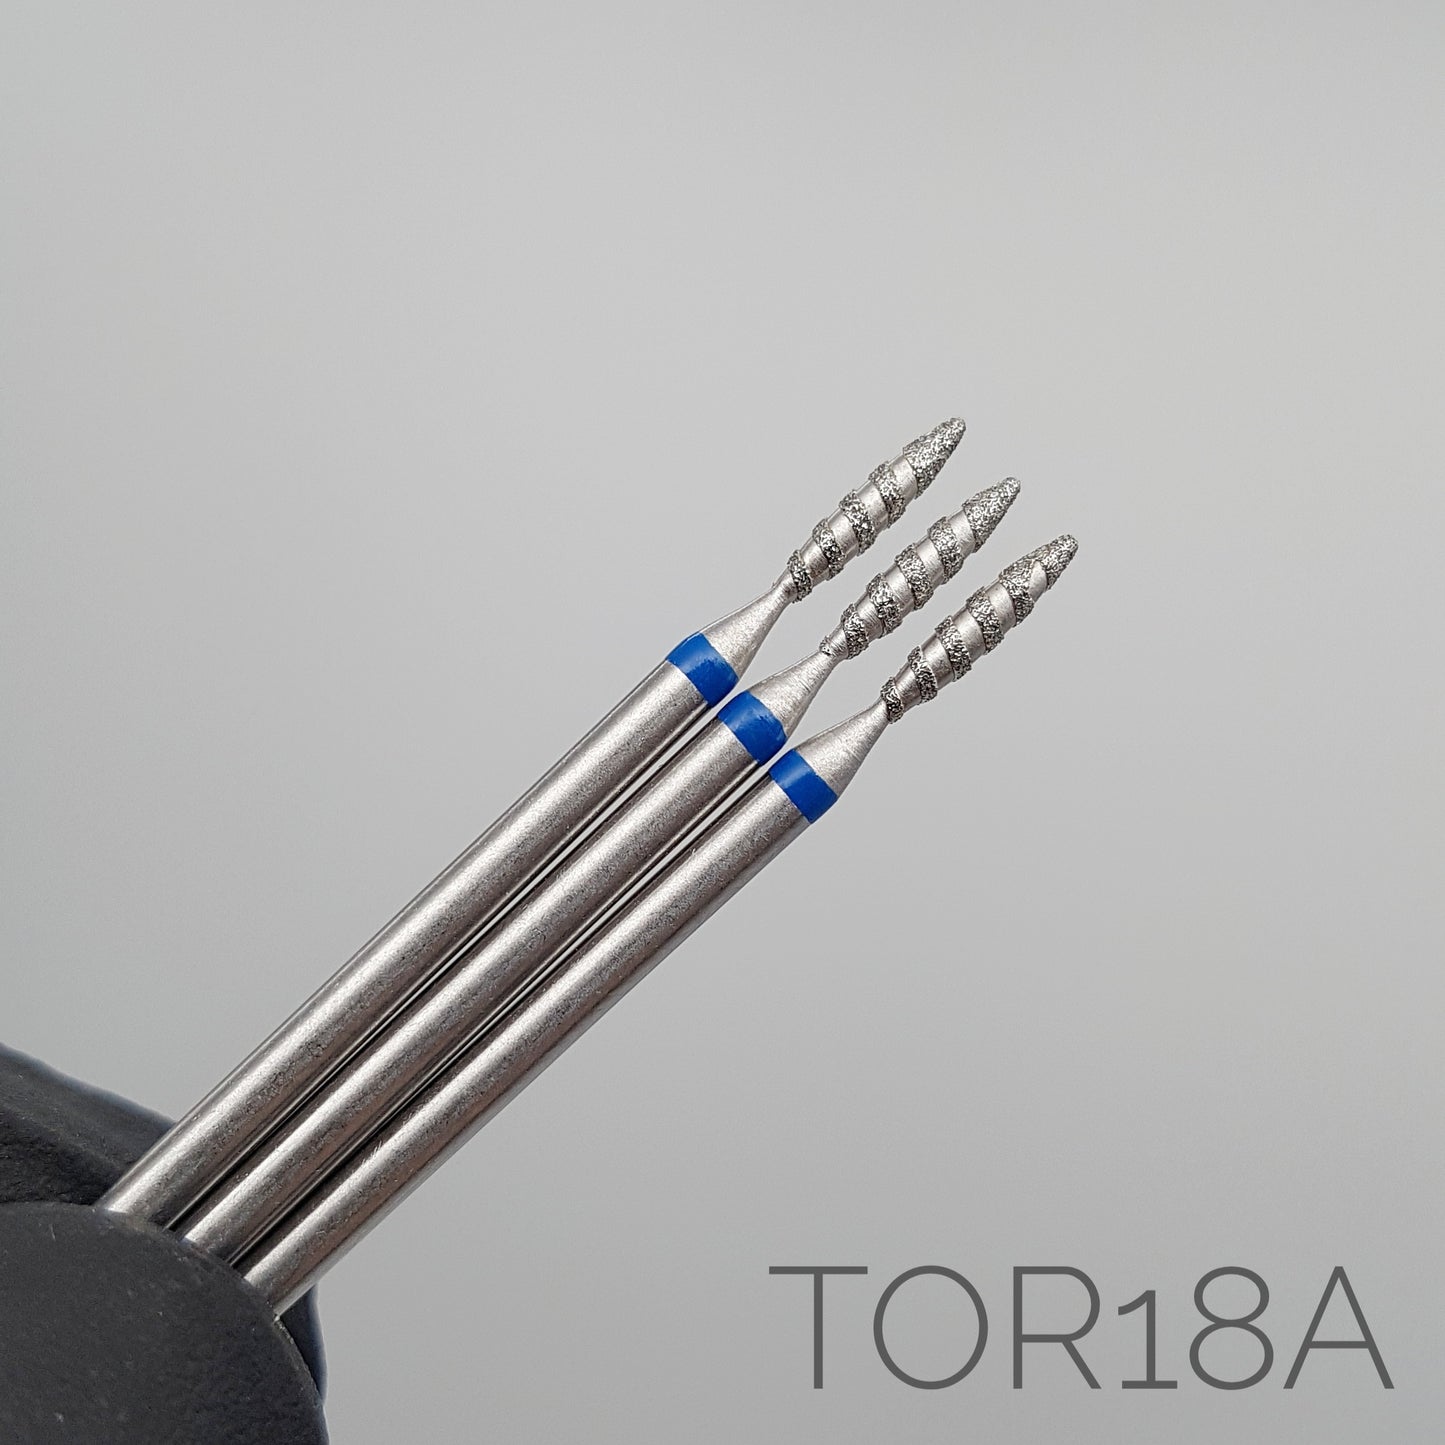 Fresa de diamante Tornado sin punta. Azul, 1.8mm. Tor18A